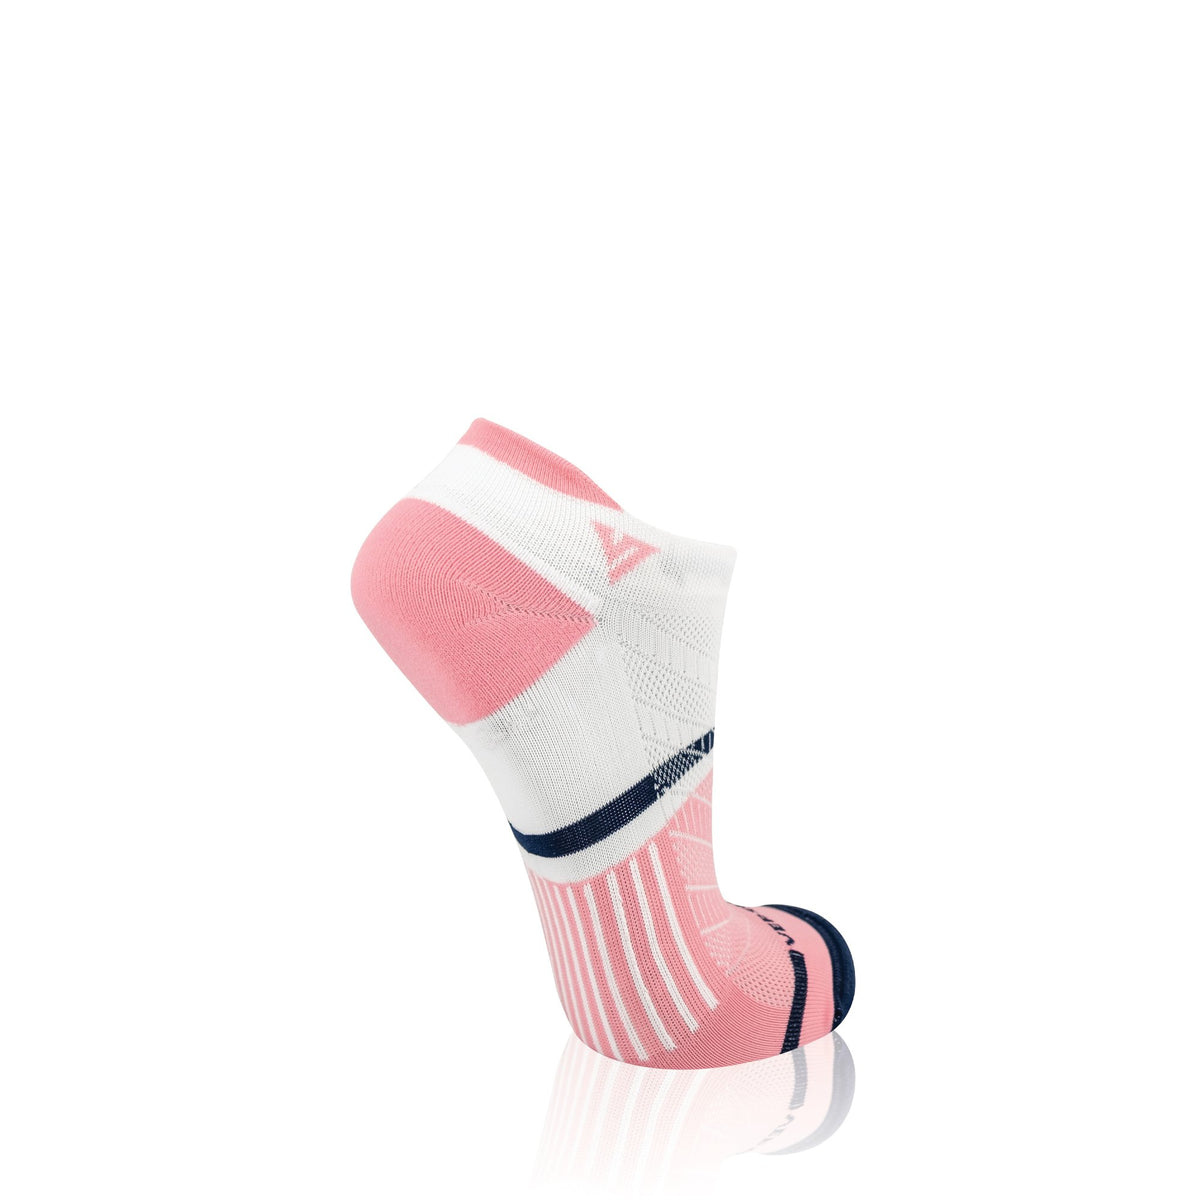 Versus Pink Trainer Socks